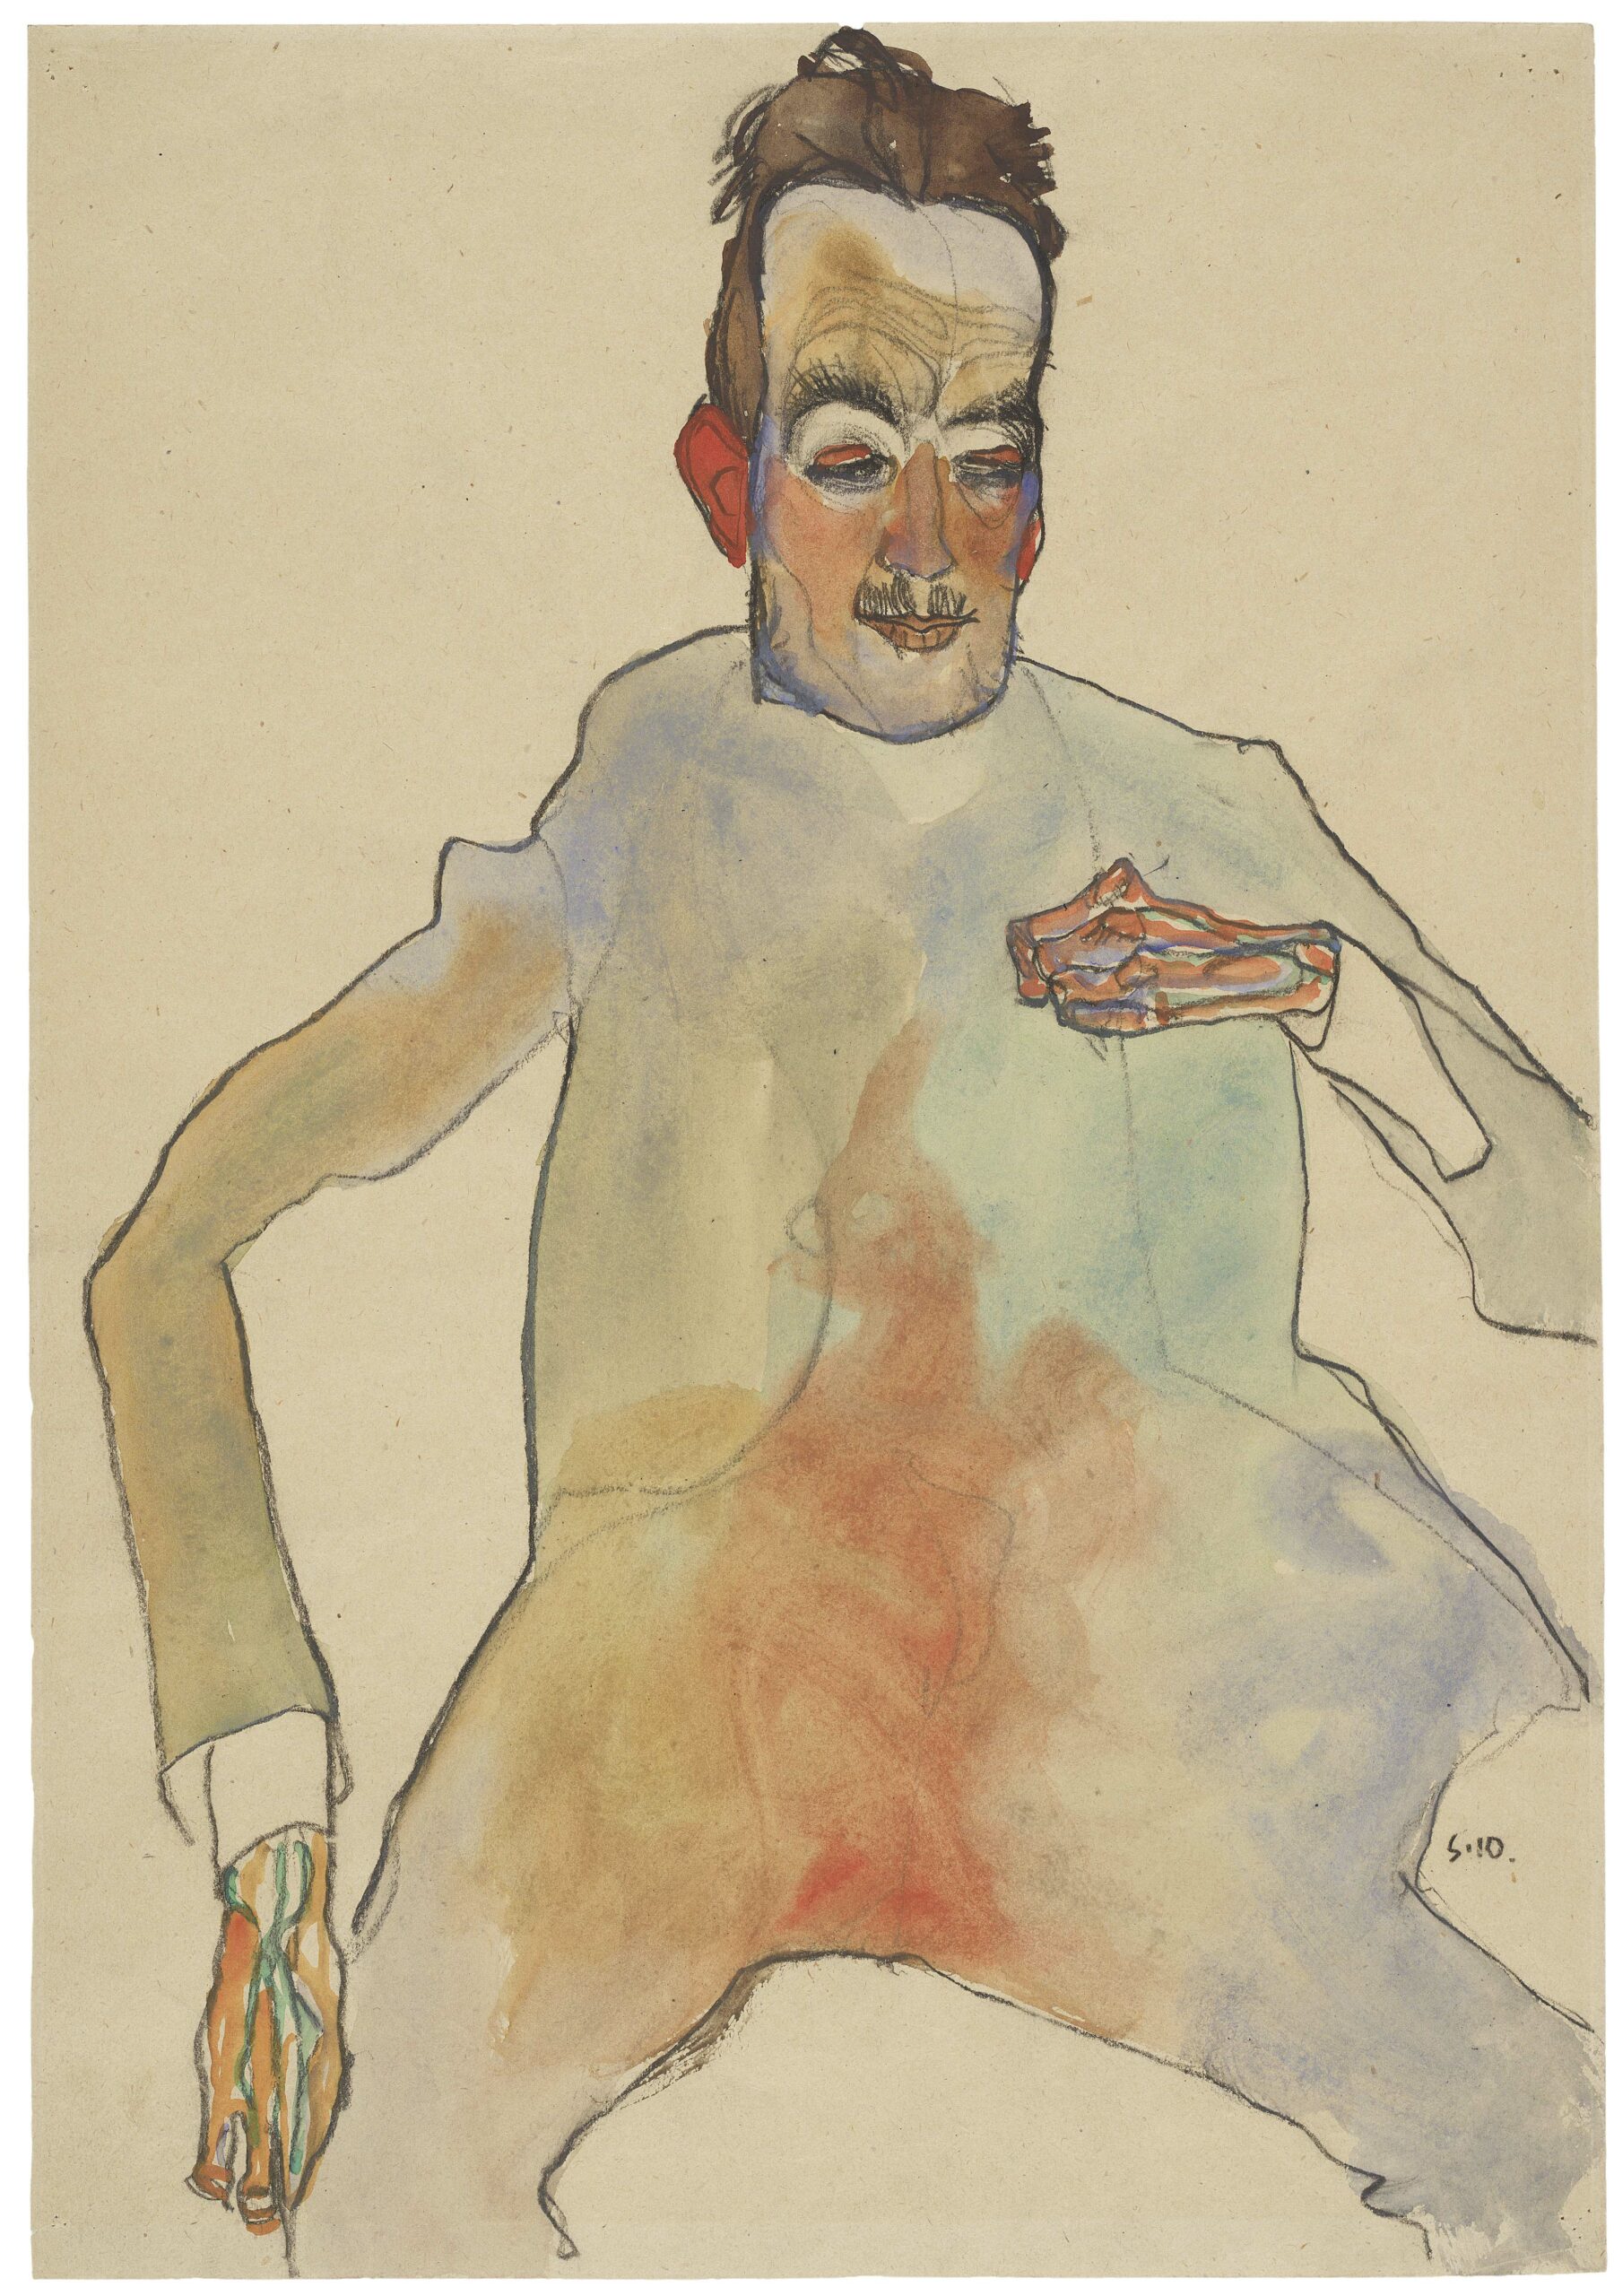 Egon Schiele, The Cellist, 1910, Black crayon, watercolour, packing paper, The Albertina Museum, Vienna Exhibition, the Royal Academy, Arts, London, Albertina Museum, Vienna